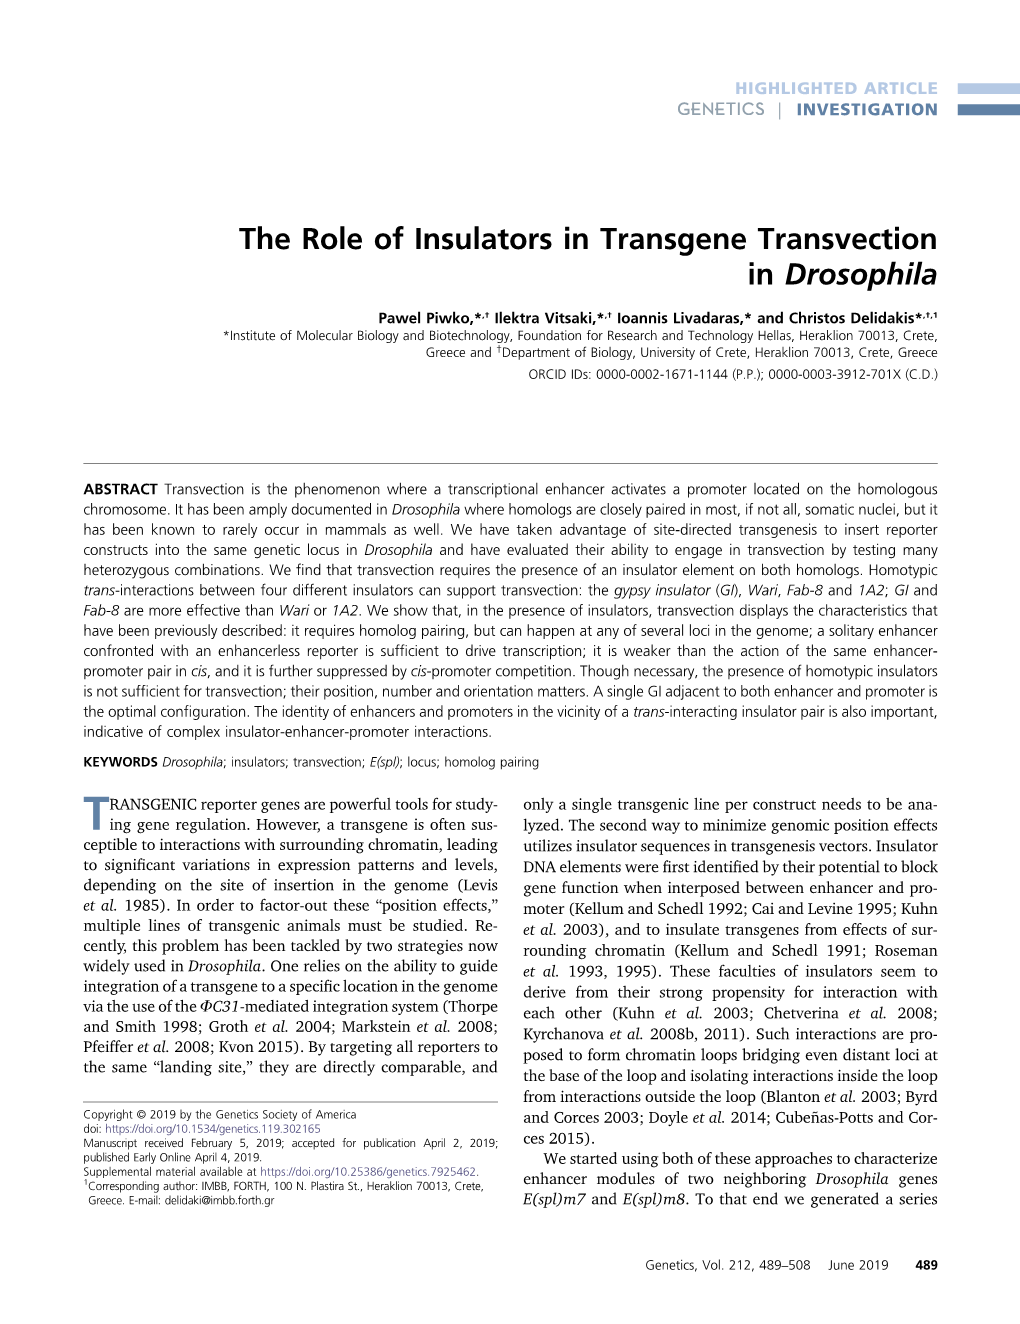 The Role of Insulators in Transgene Transvection in Drosophila